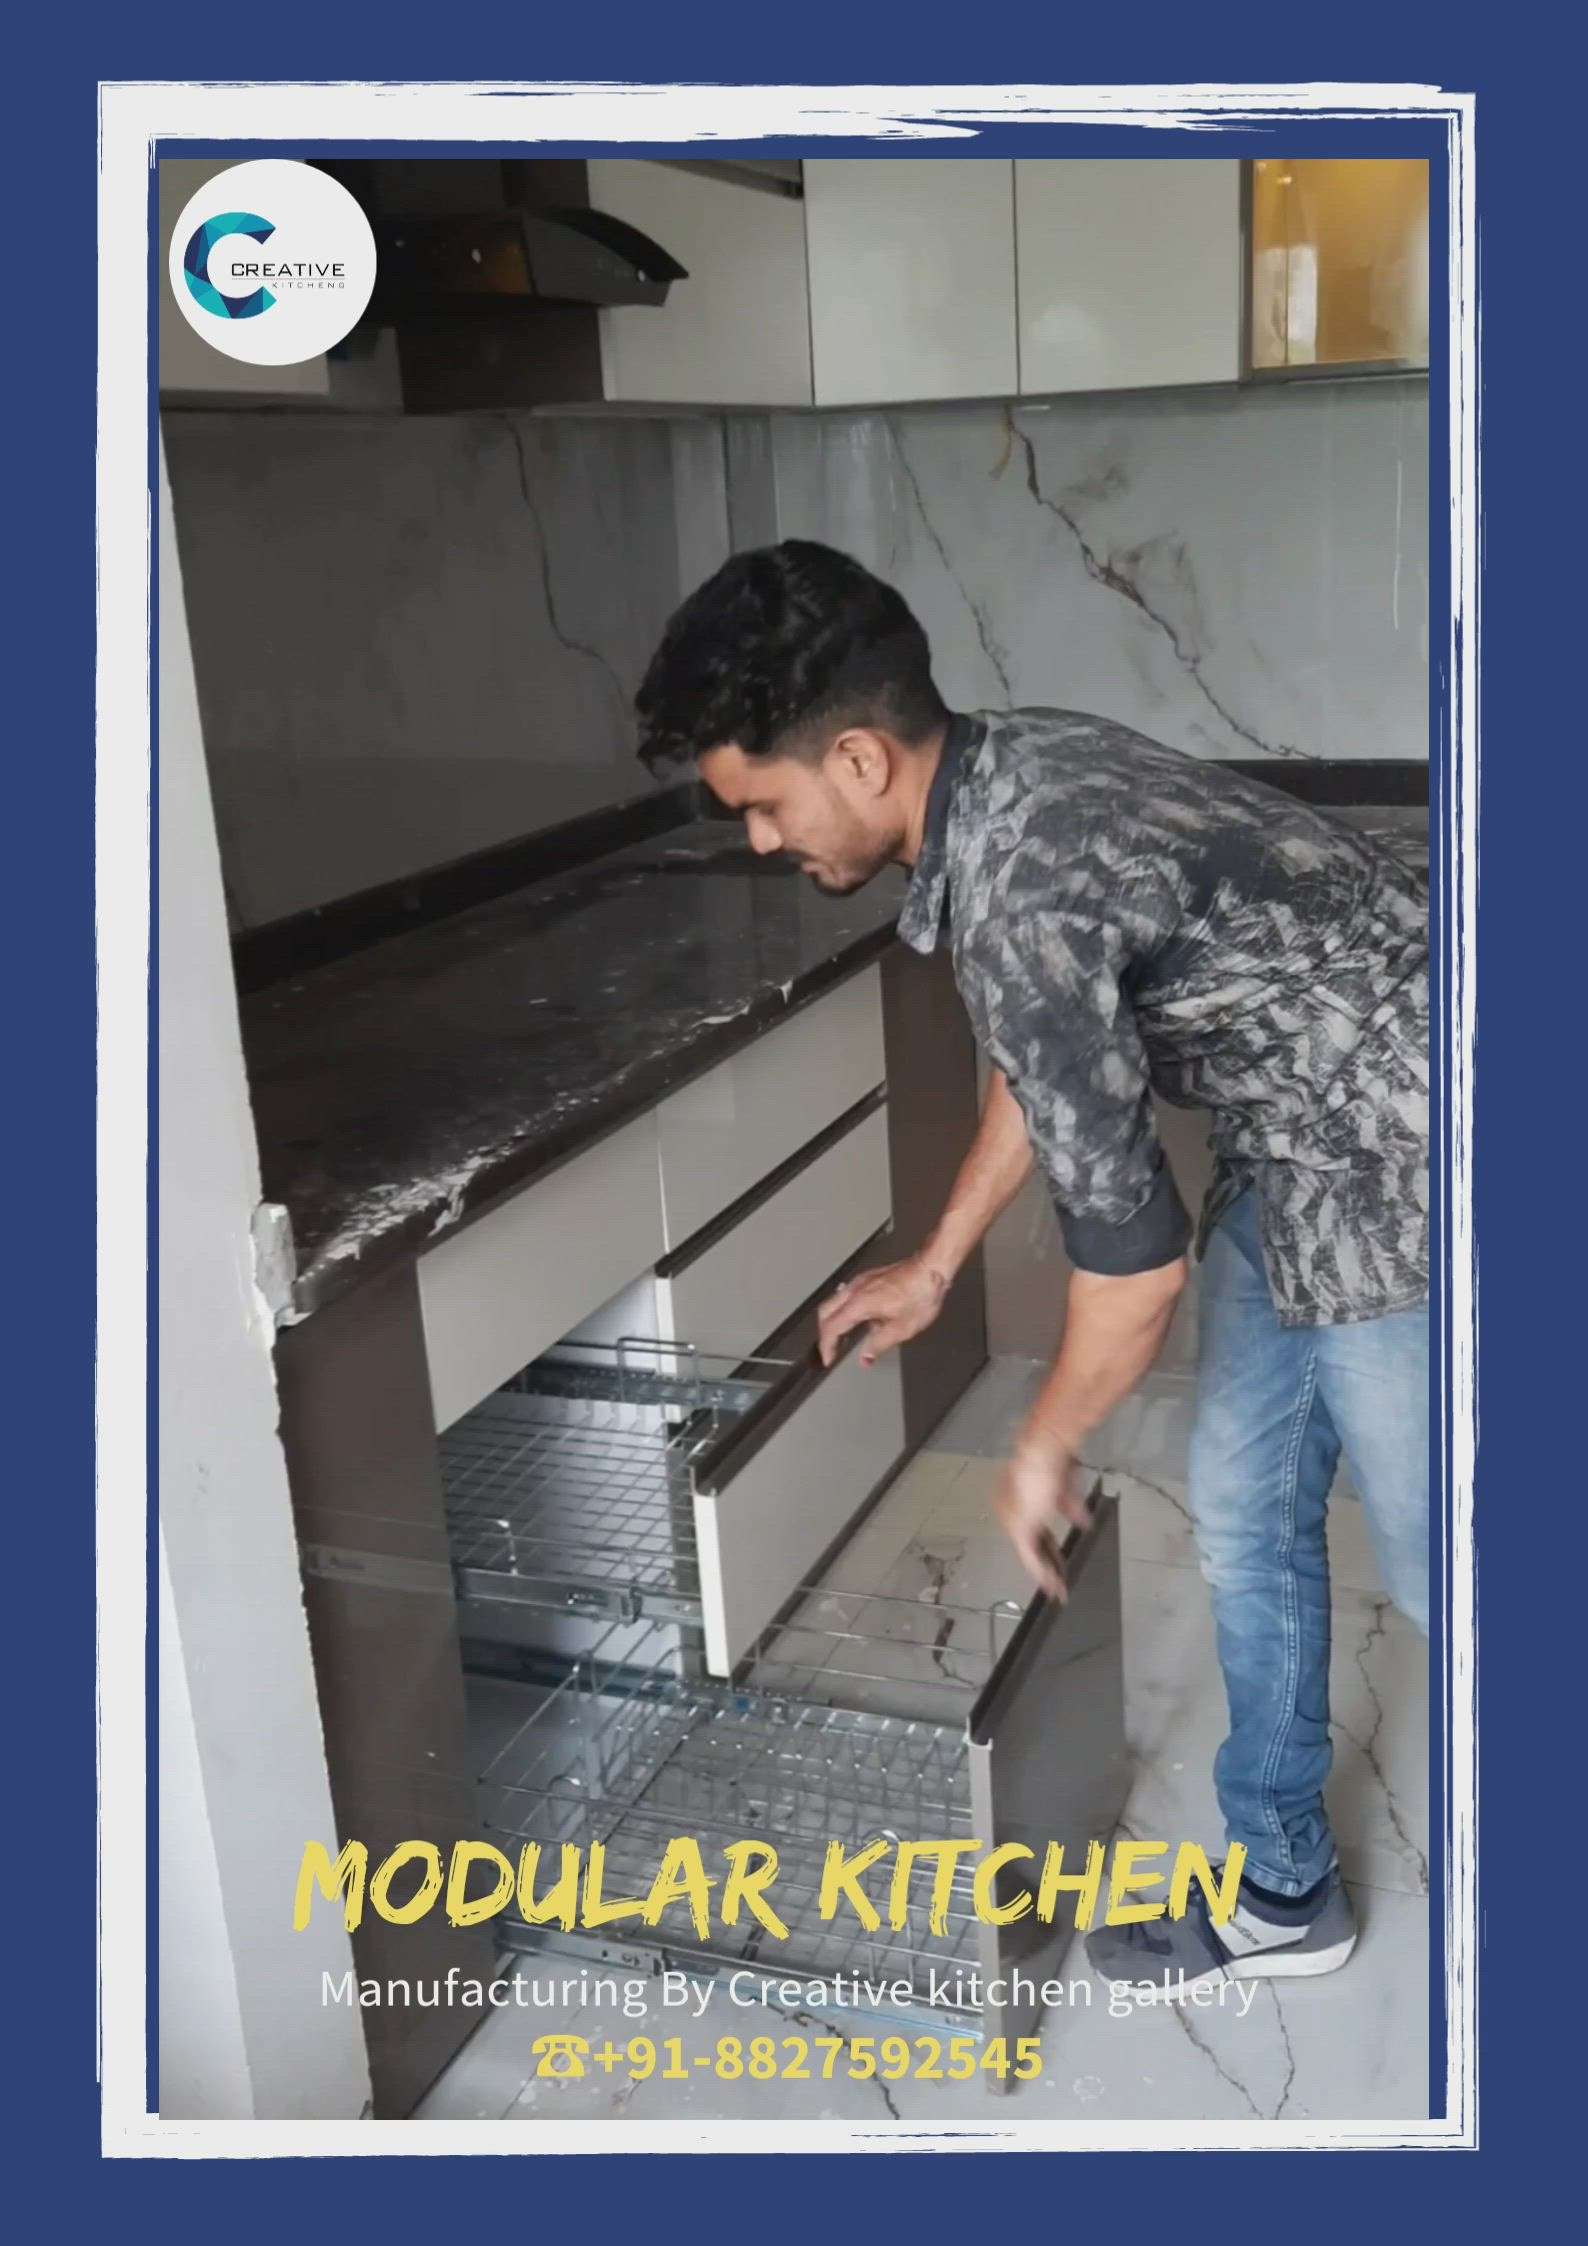 Modular kitchen (INDORE)
☎+91-8827592545 
#ebcofindia 
###creativekitchengalleryvchen #indorediaries #indorecity #indorefood #indorefoodexplore